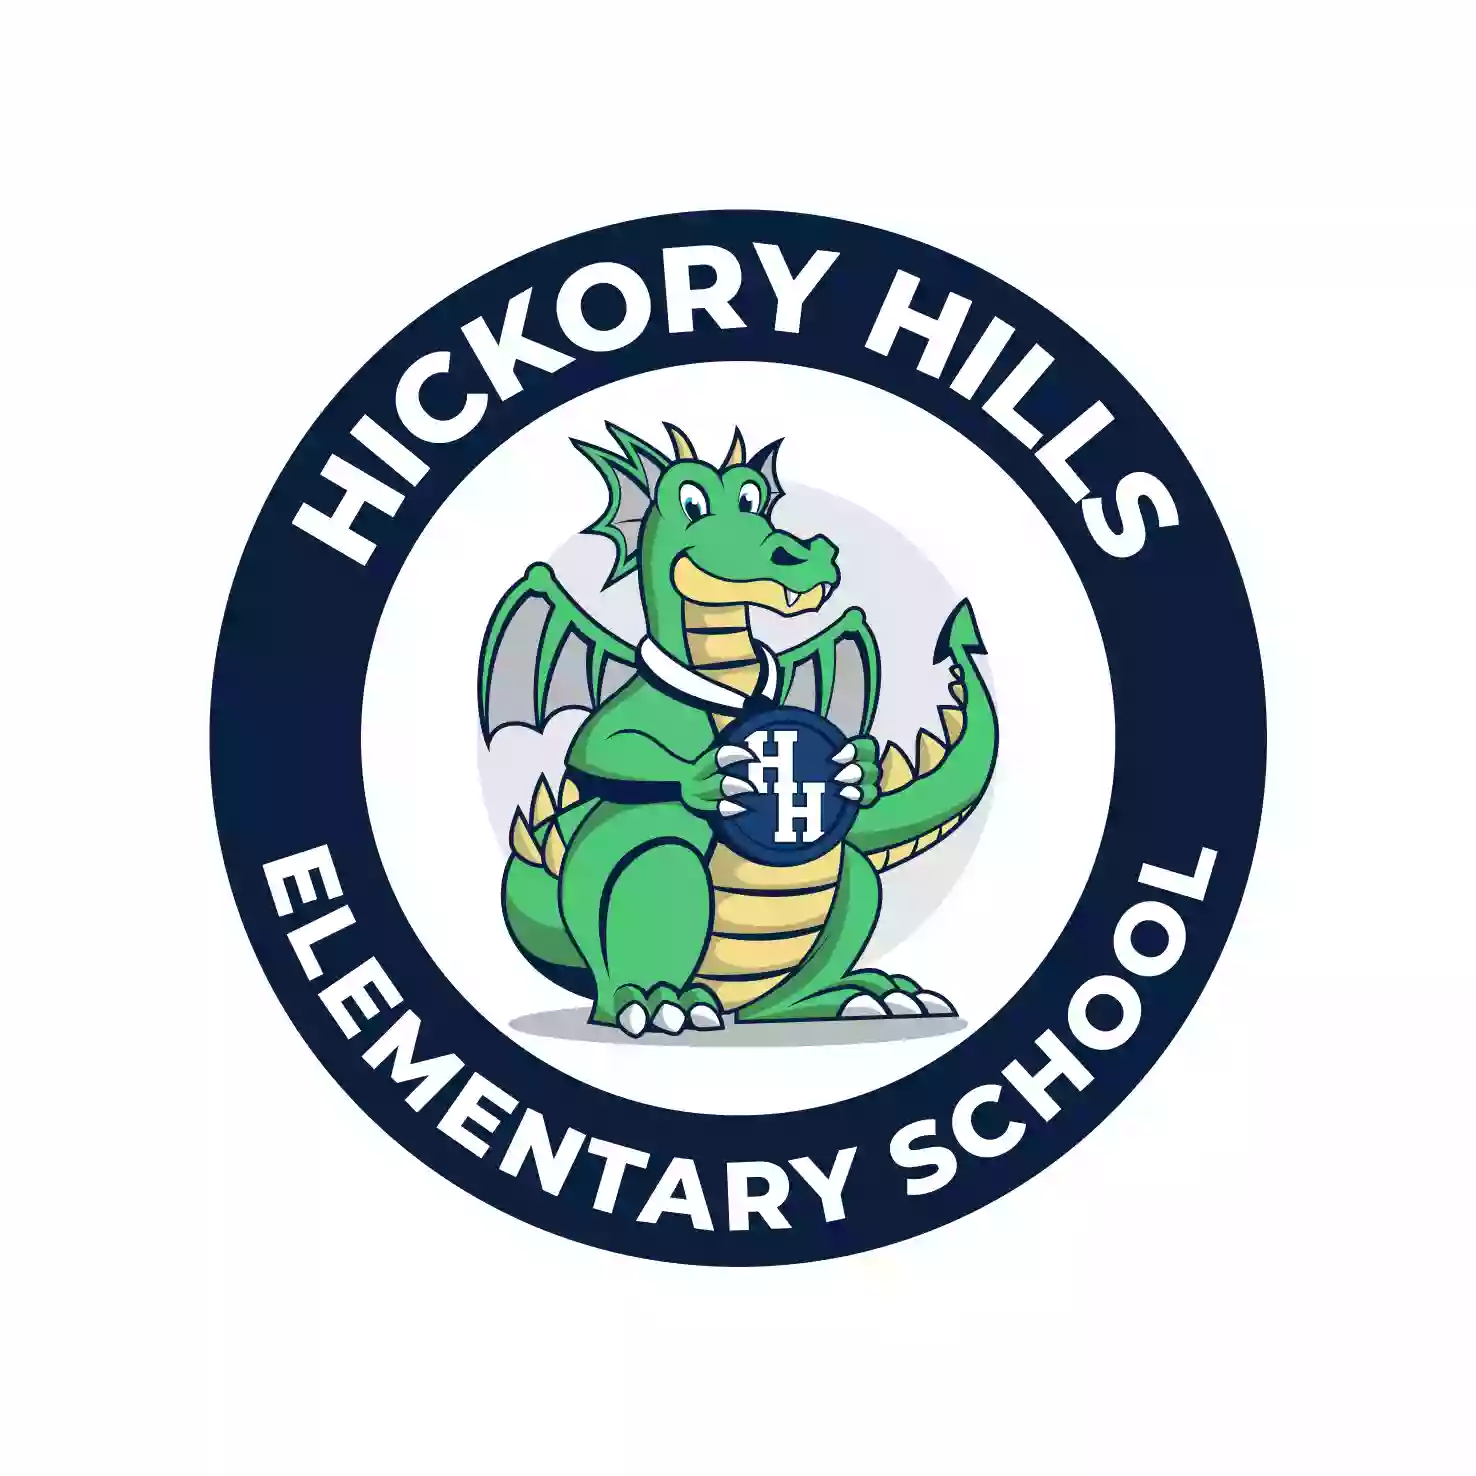 Hickory Hills Elementary School